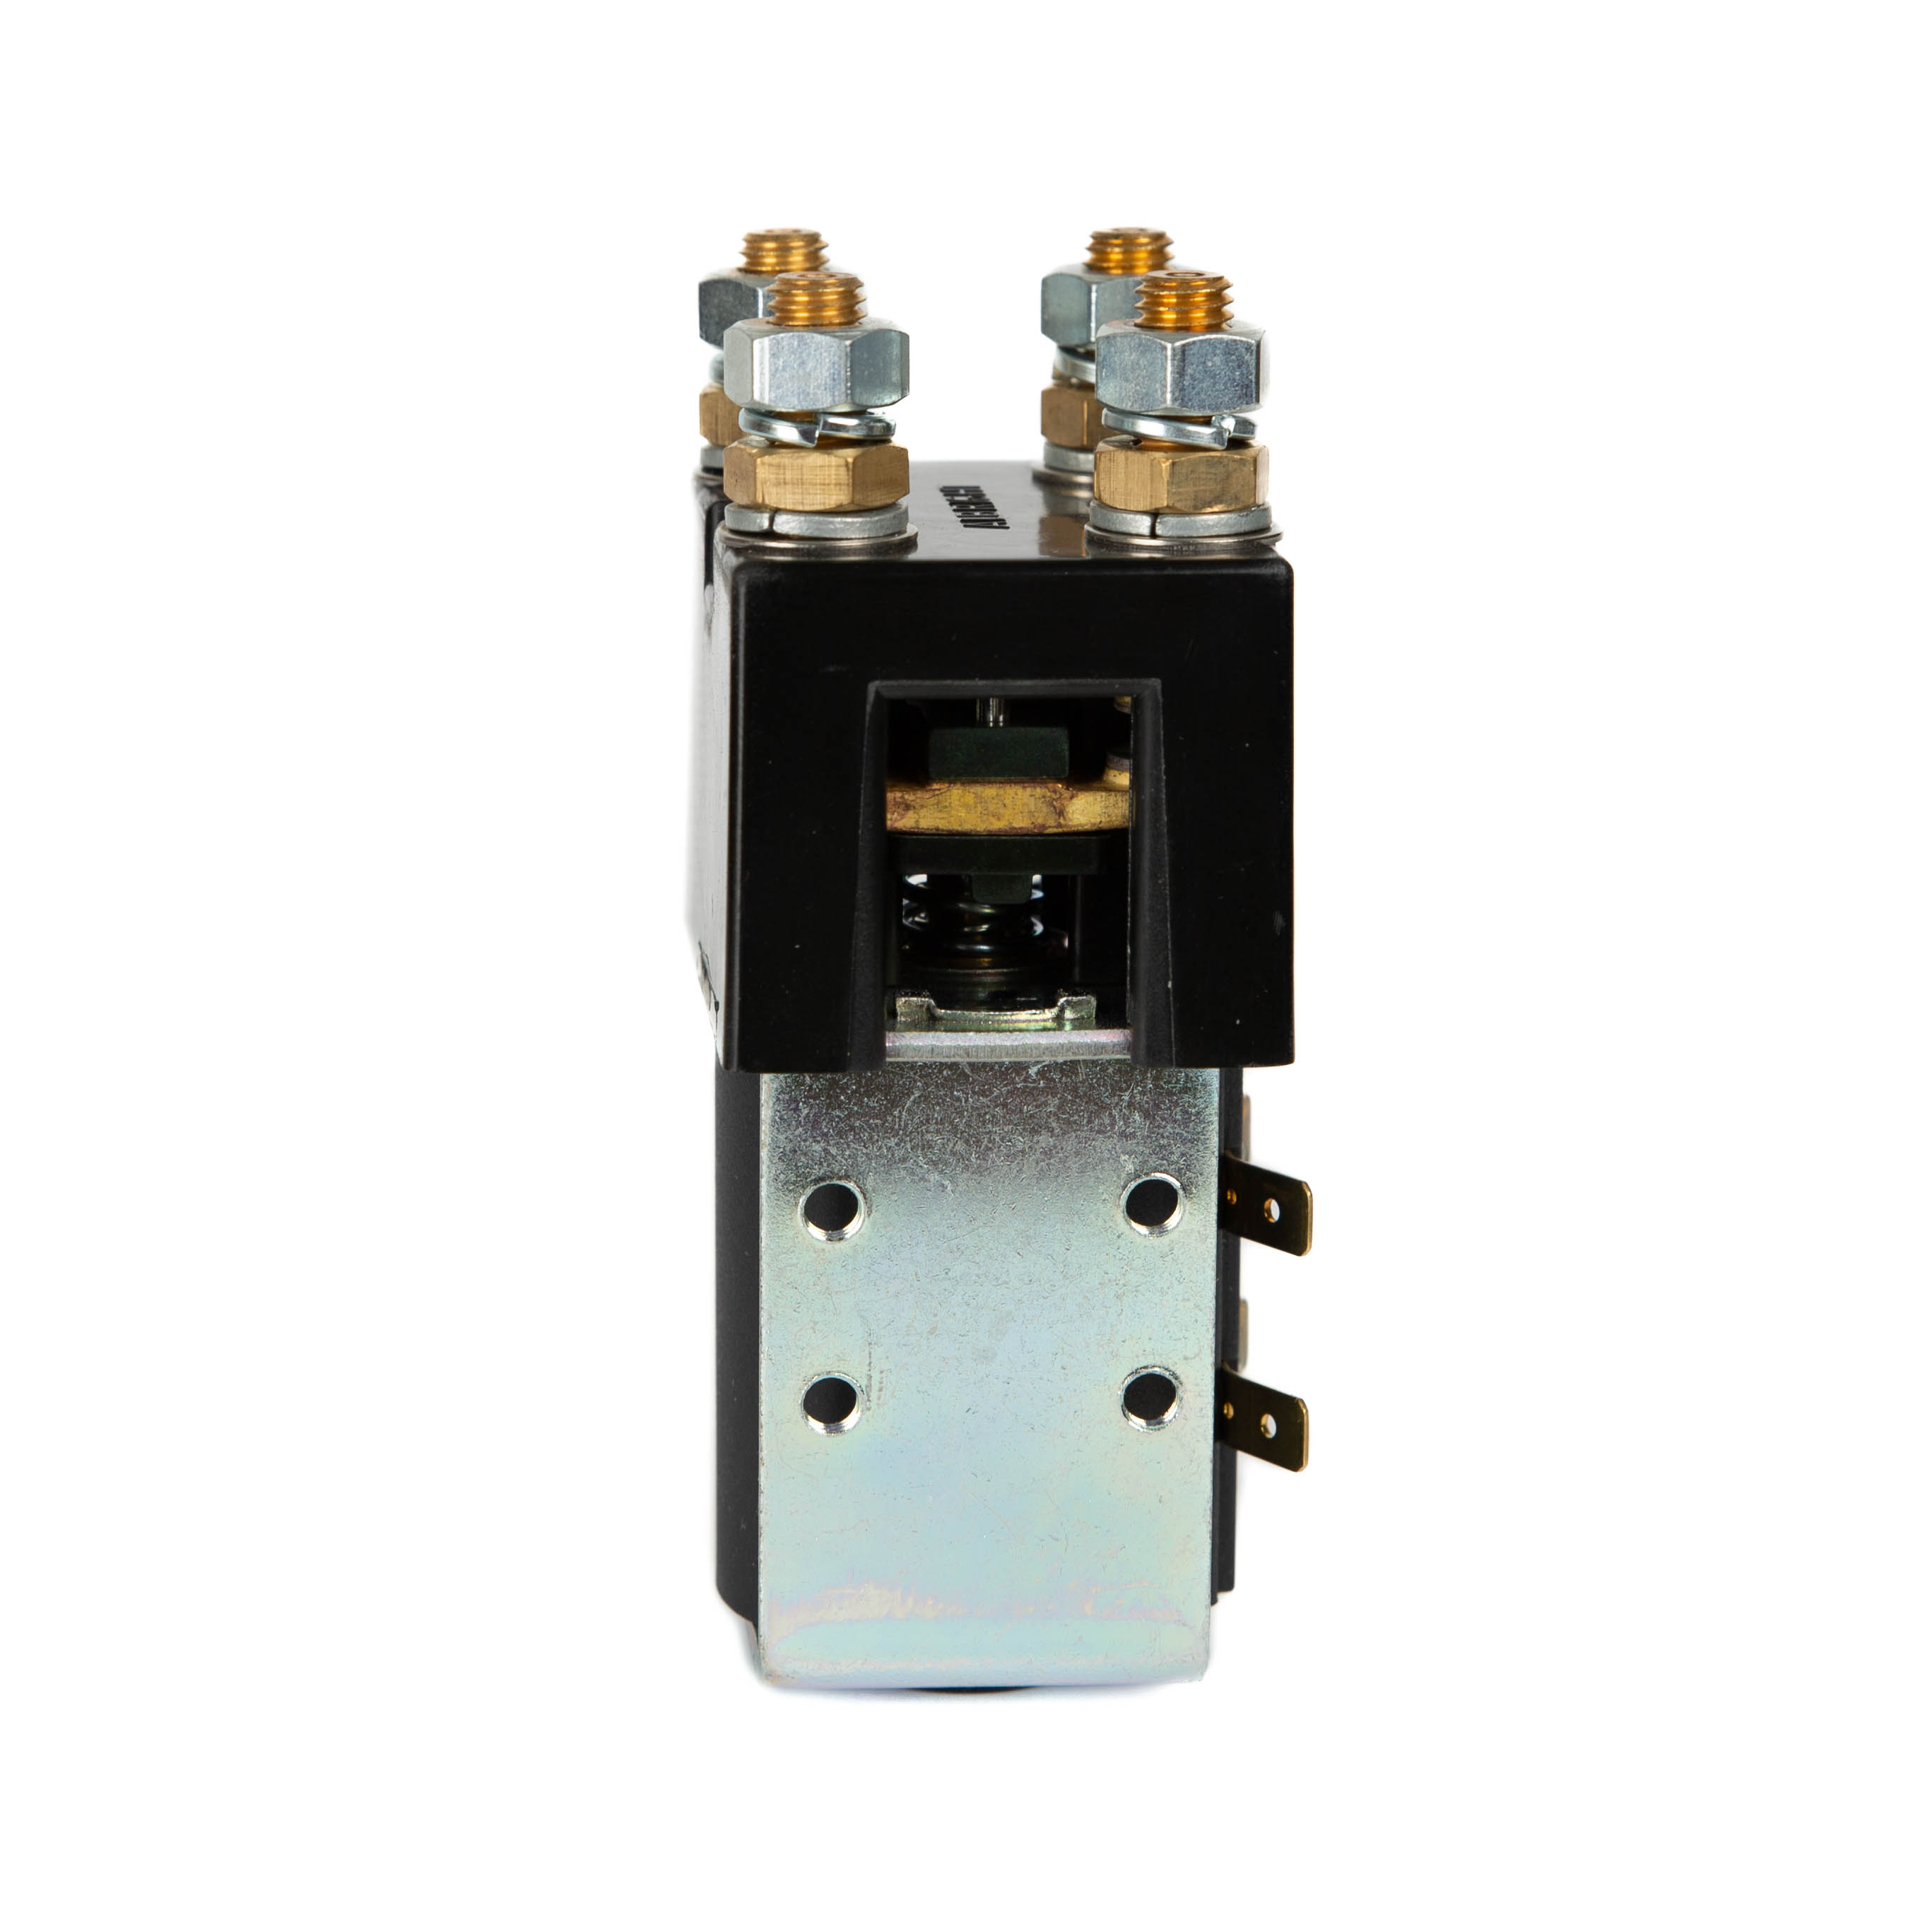 Albright SW120-4 24 CO DC контактор постійного струму, 125A, 80VDC, DP-ST